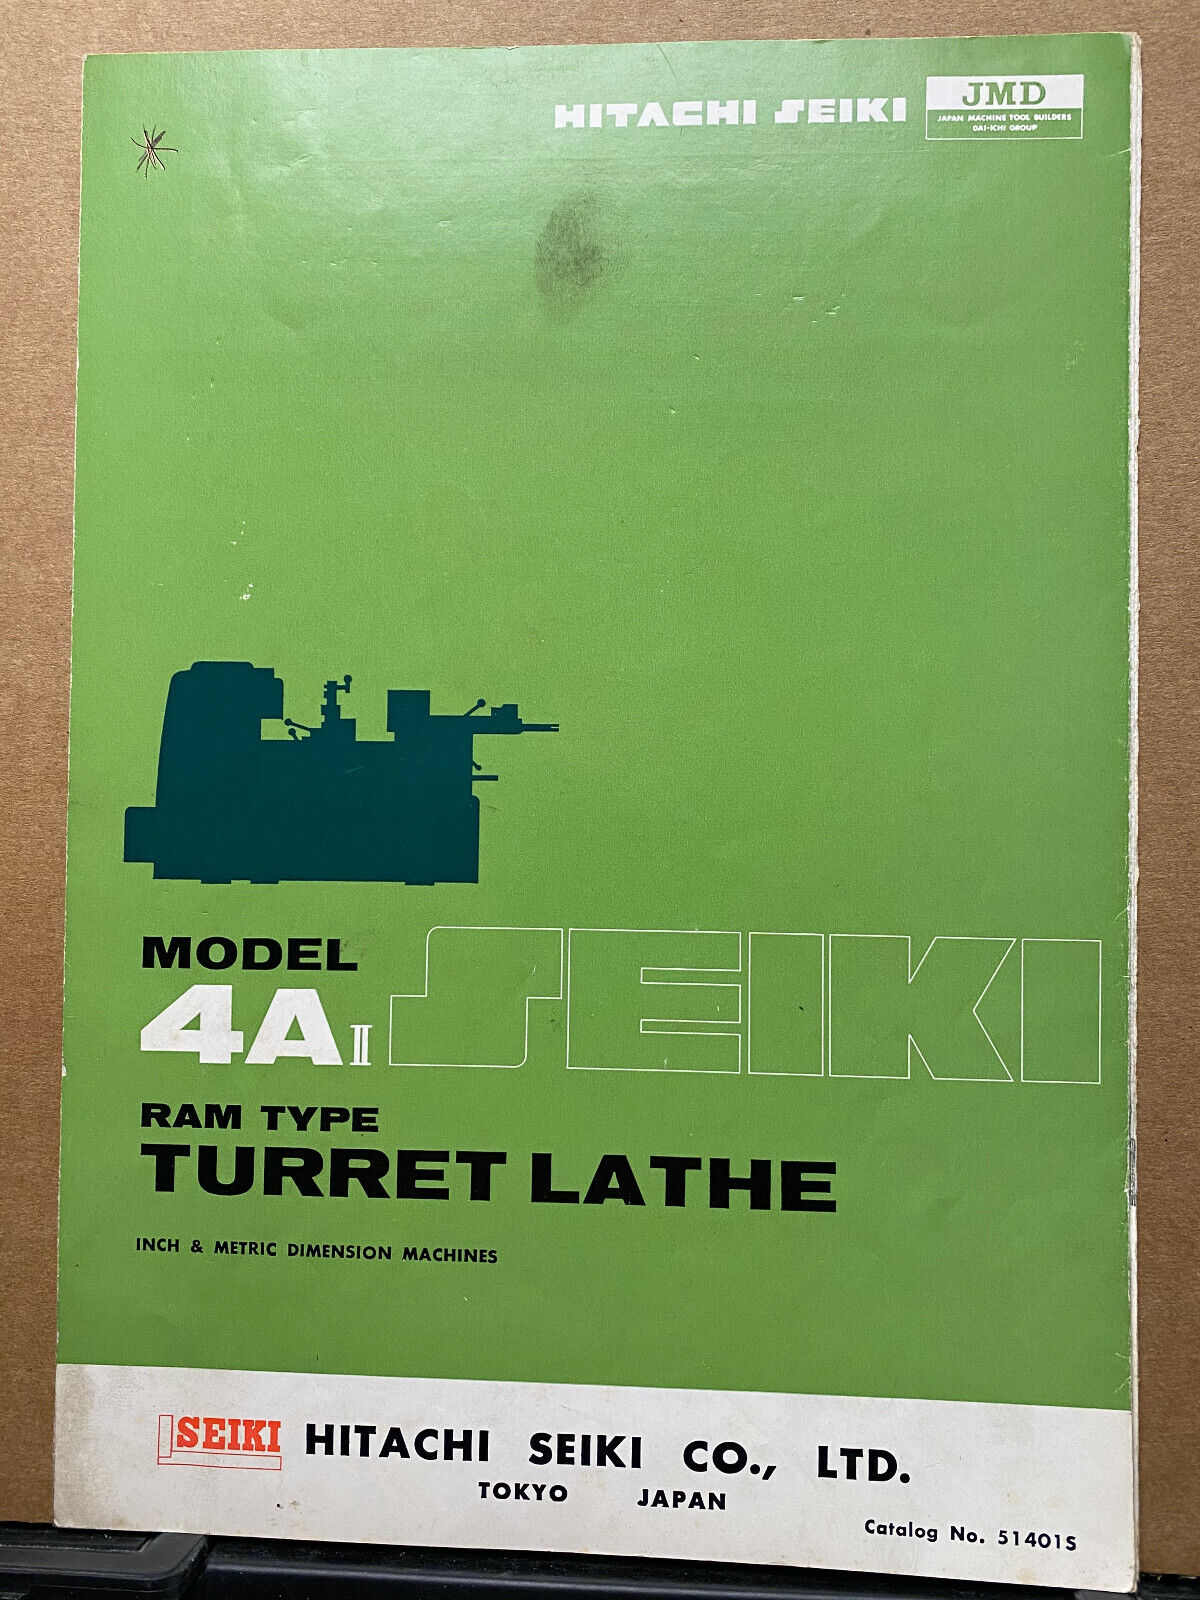 Hitachi Seiki Co Catalog ~ 4AII Turret Lathe Machine Tool Brochure